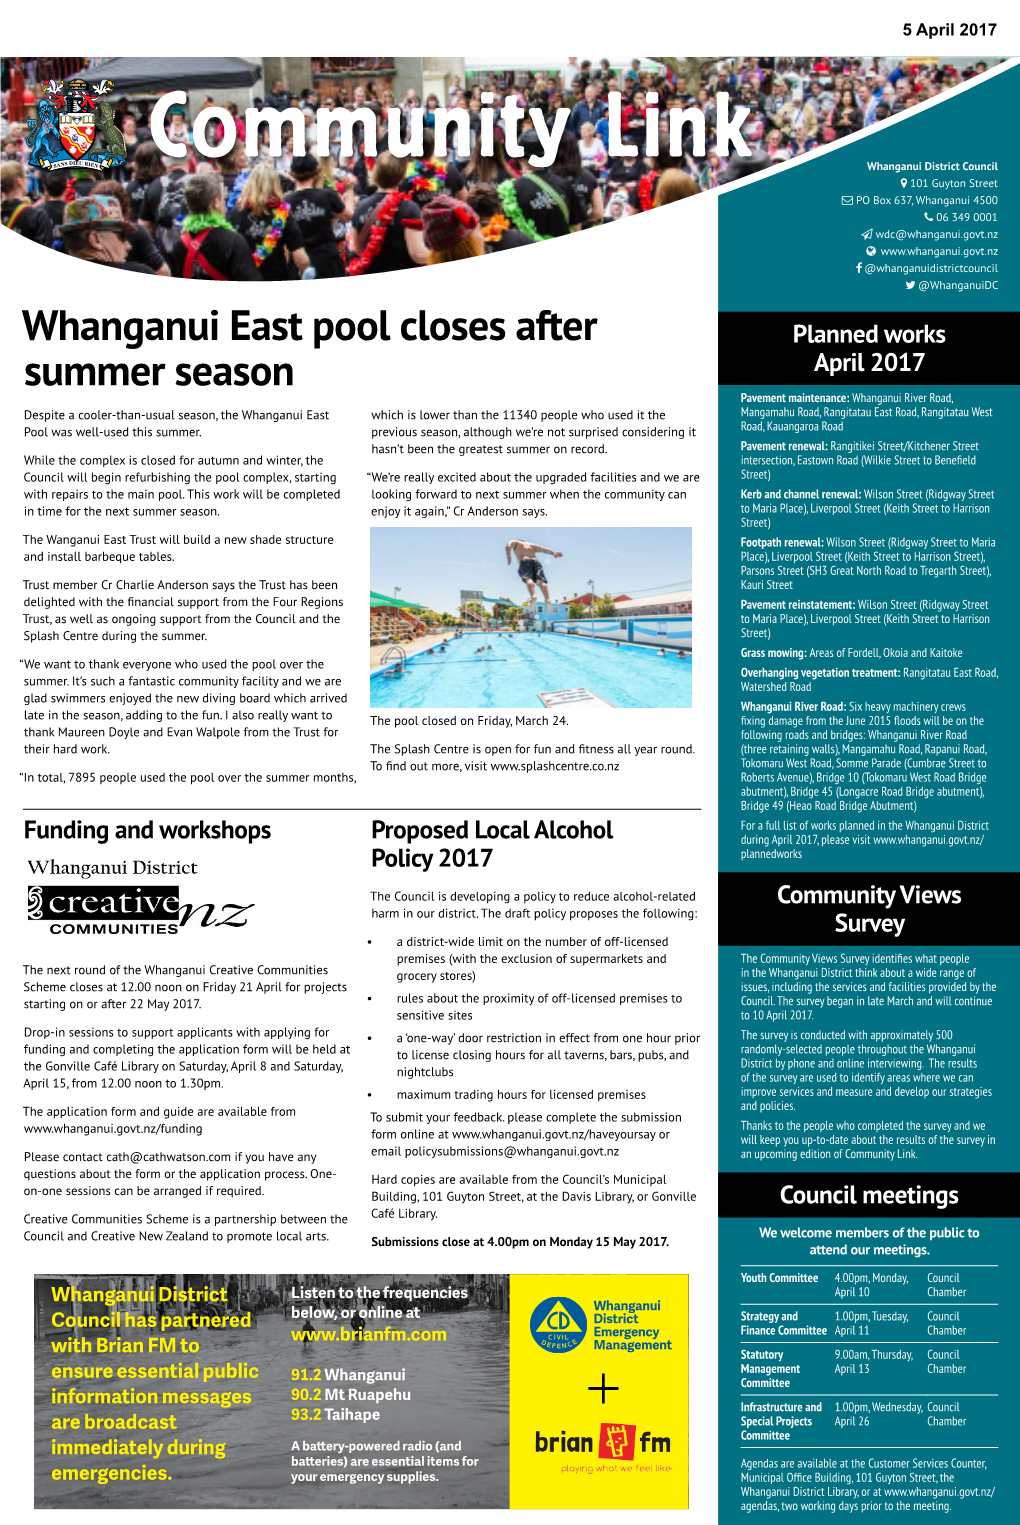 Whanganui East Pool Closes After Summer Season